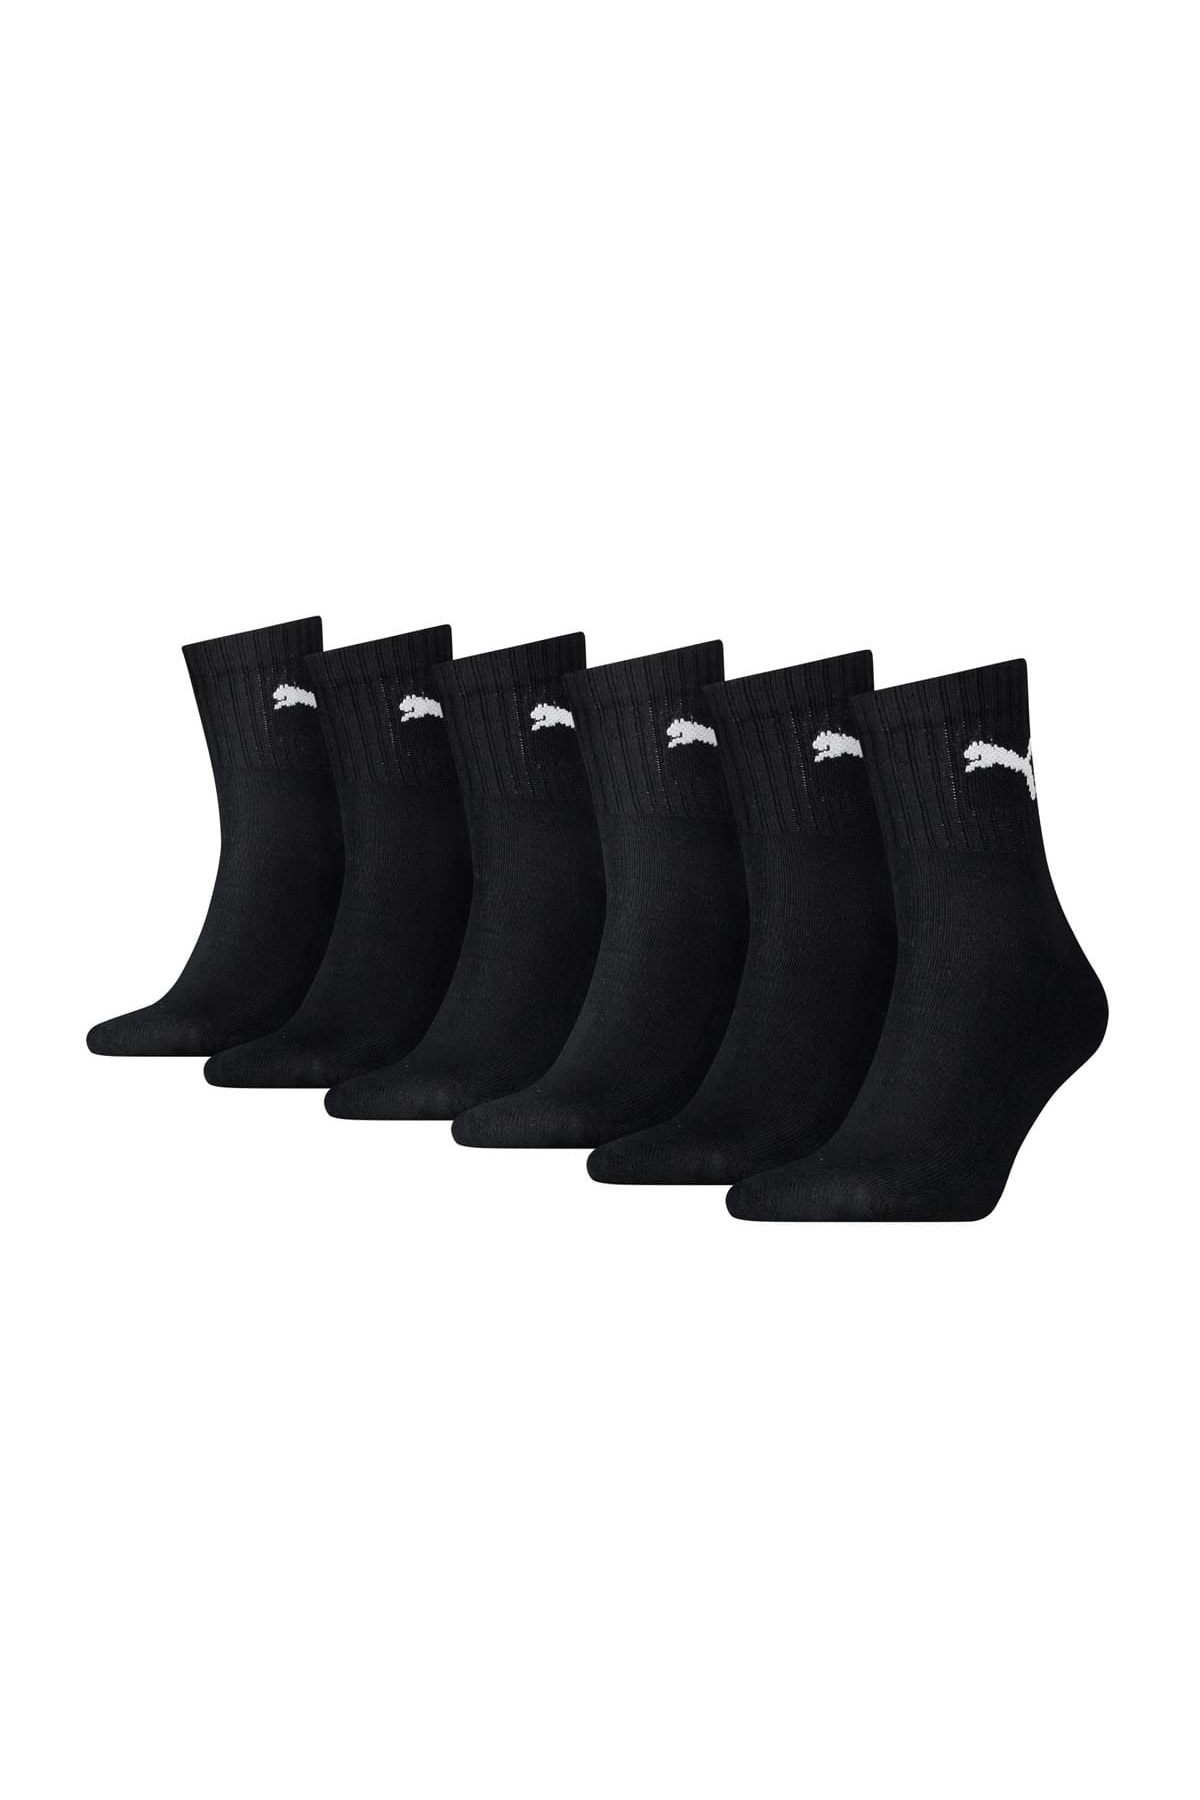 Puma Socken Schwarz 6er-Pack Fast ausverkauft